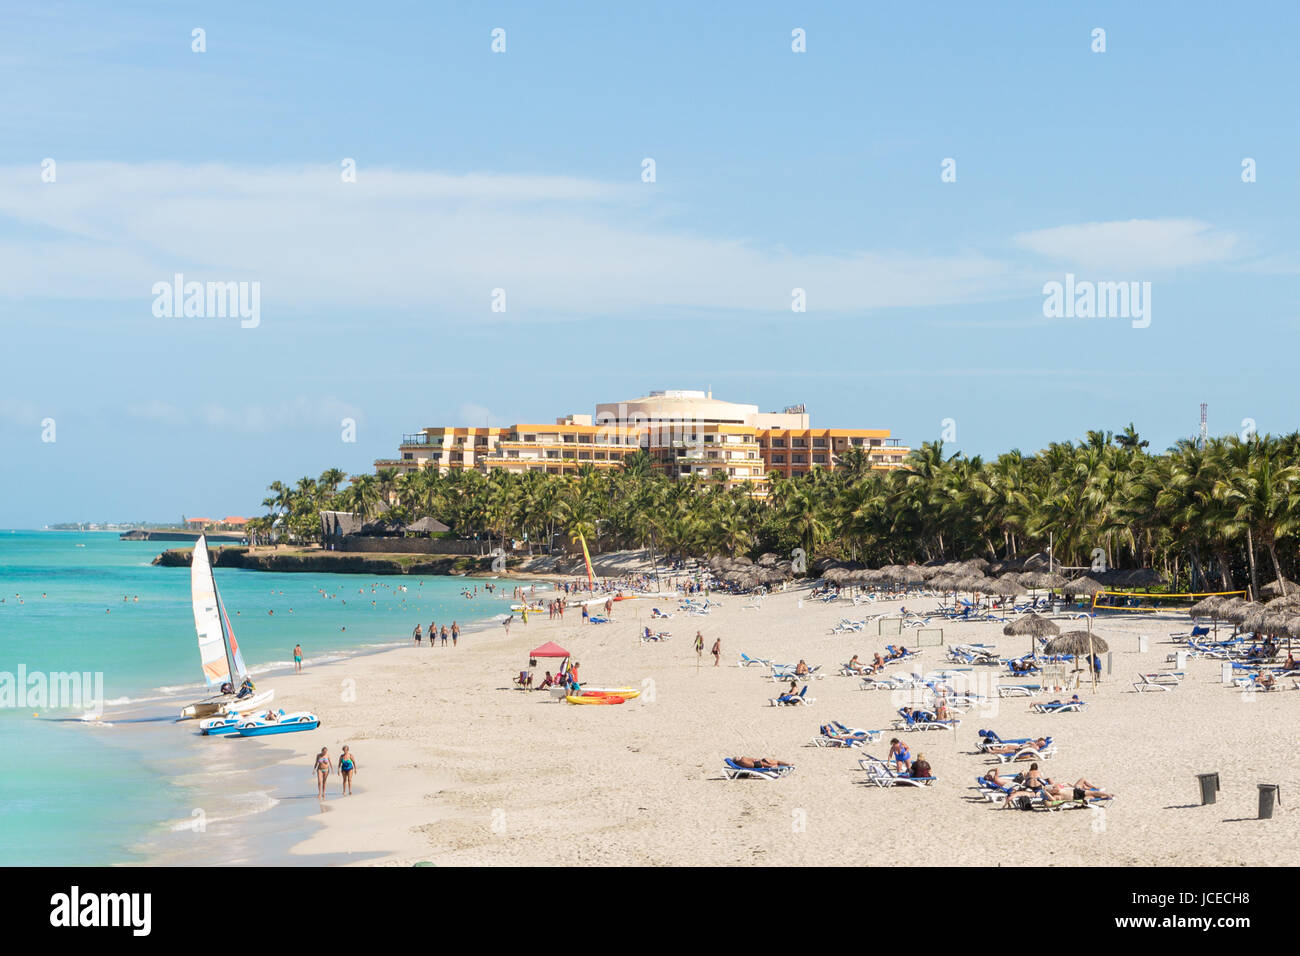 Tourists enjoying the beach of Varadero Stock Photo